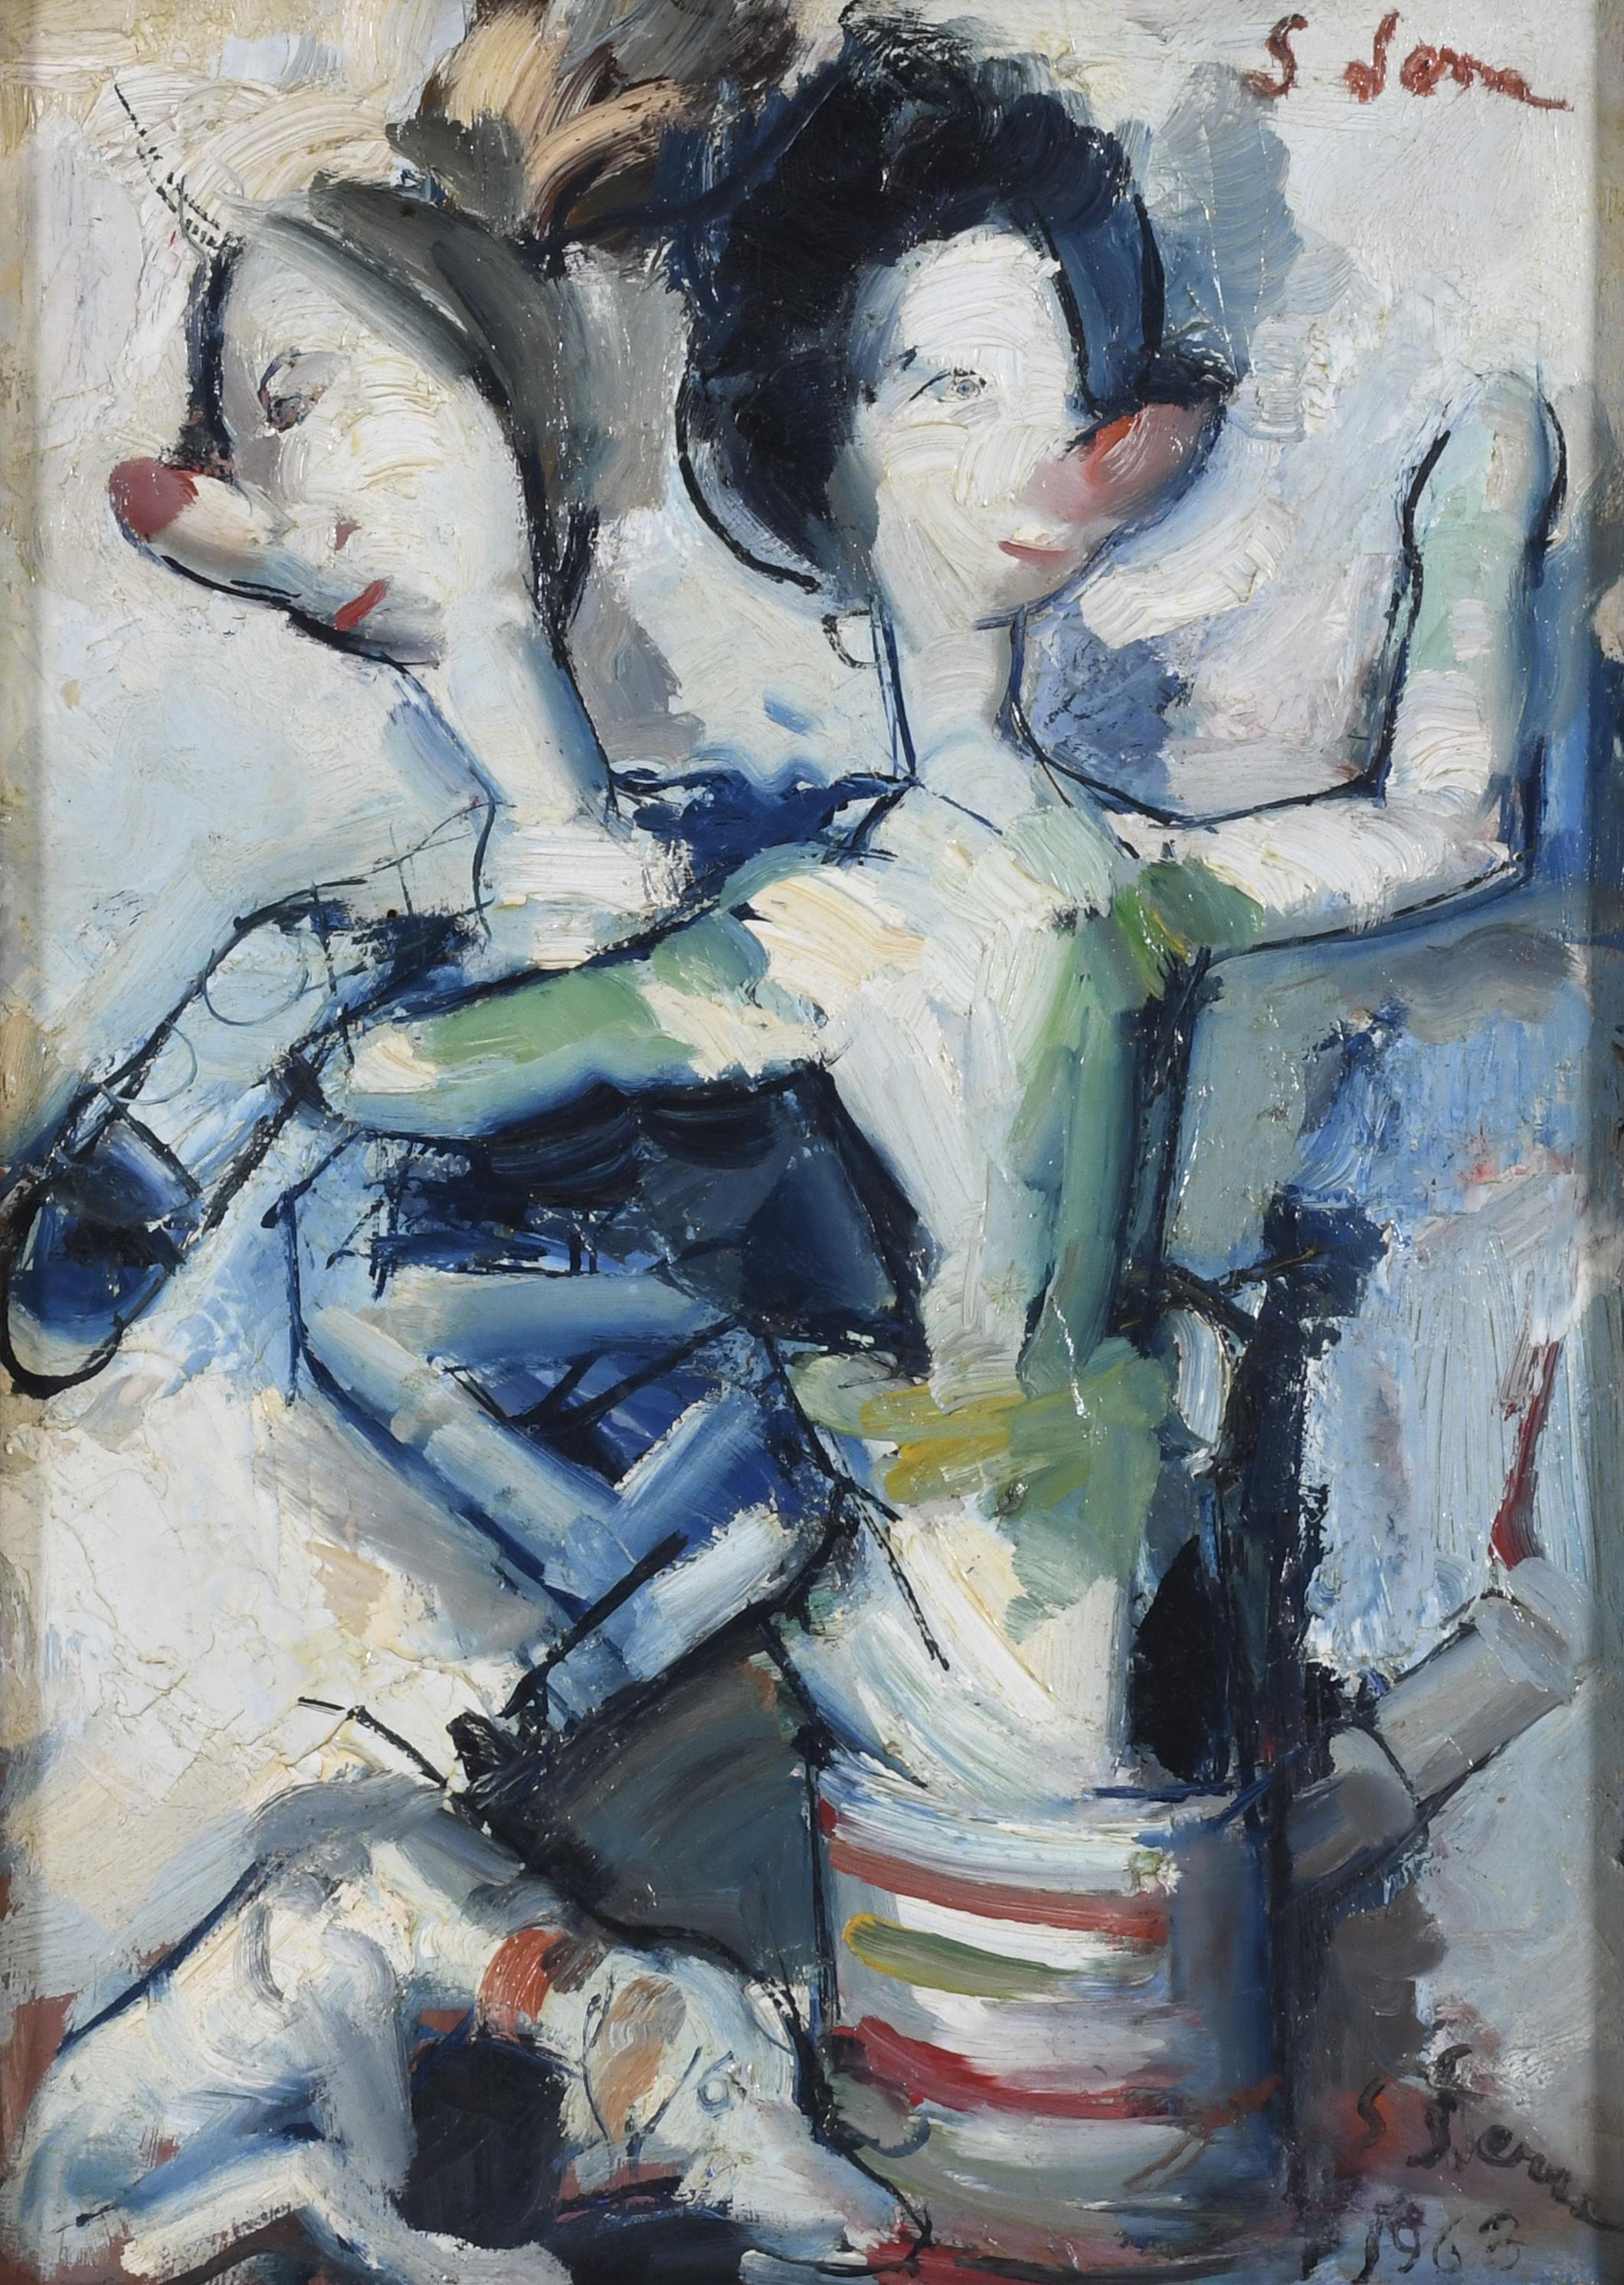 JOAN SERRA MELGOSA (1899-1970) "PERSONAJES", 1963.